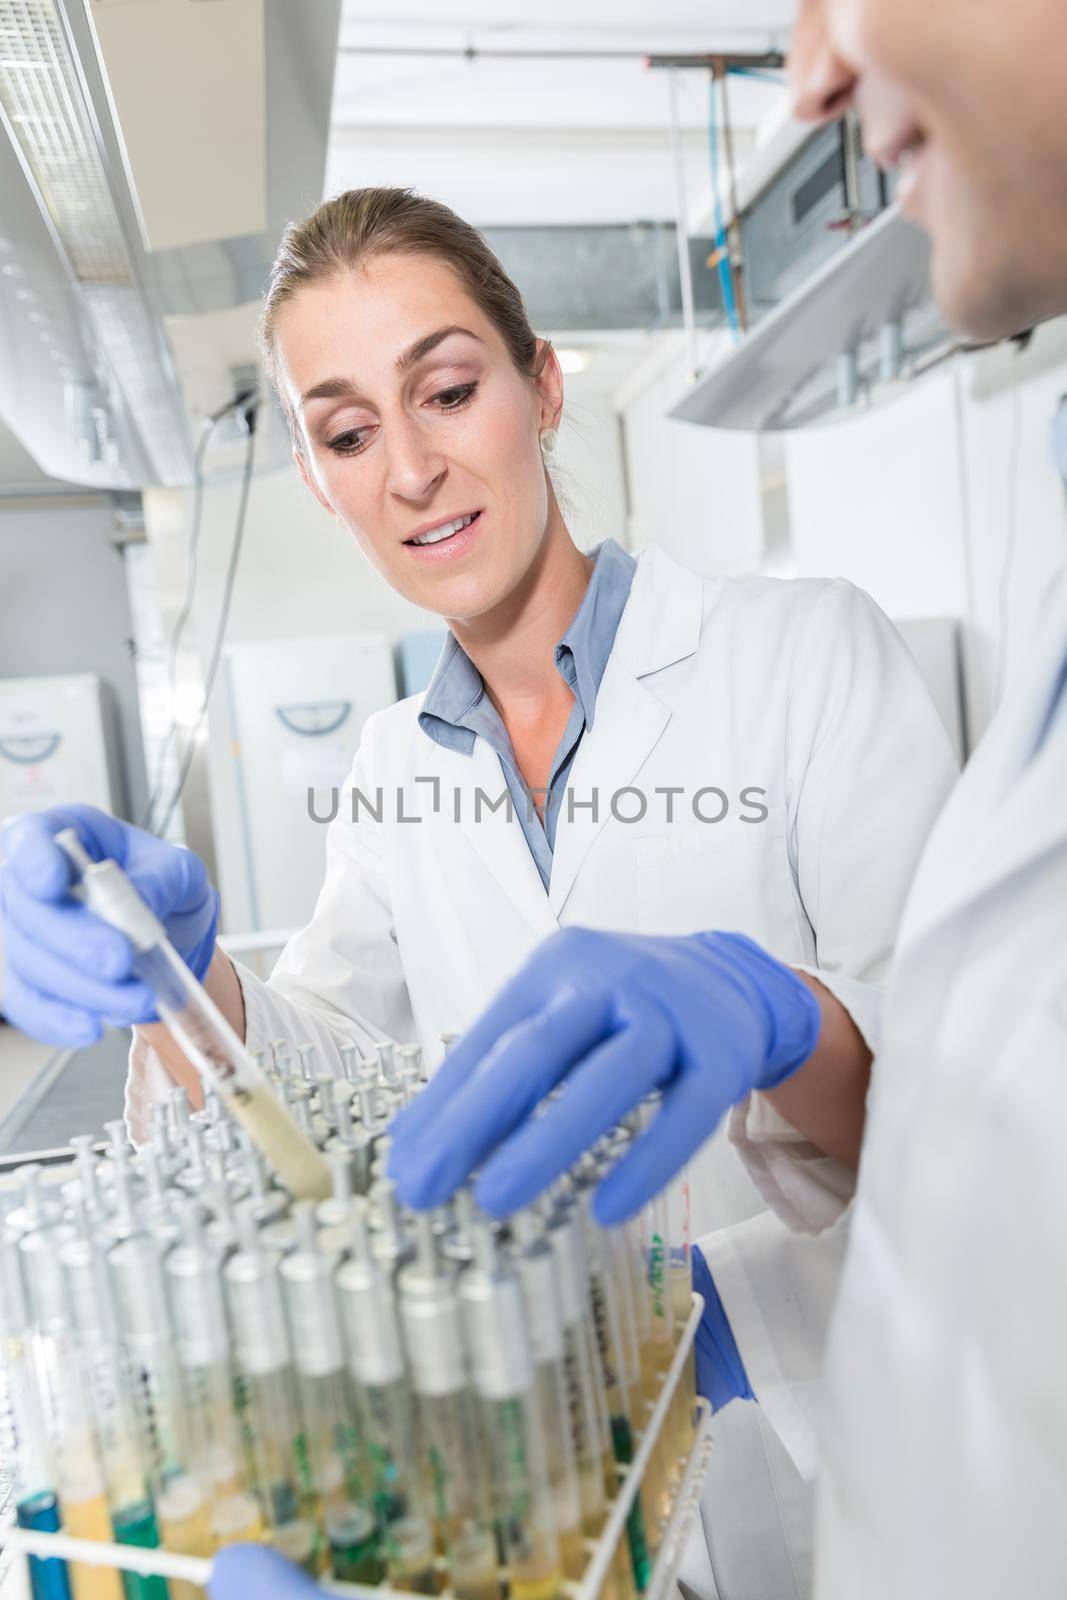 Scientist arrange samples for test in research lab